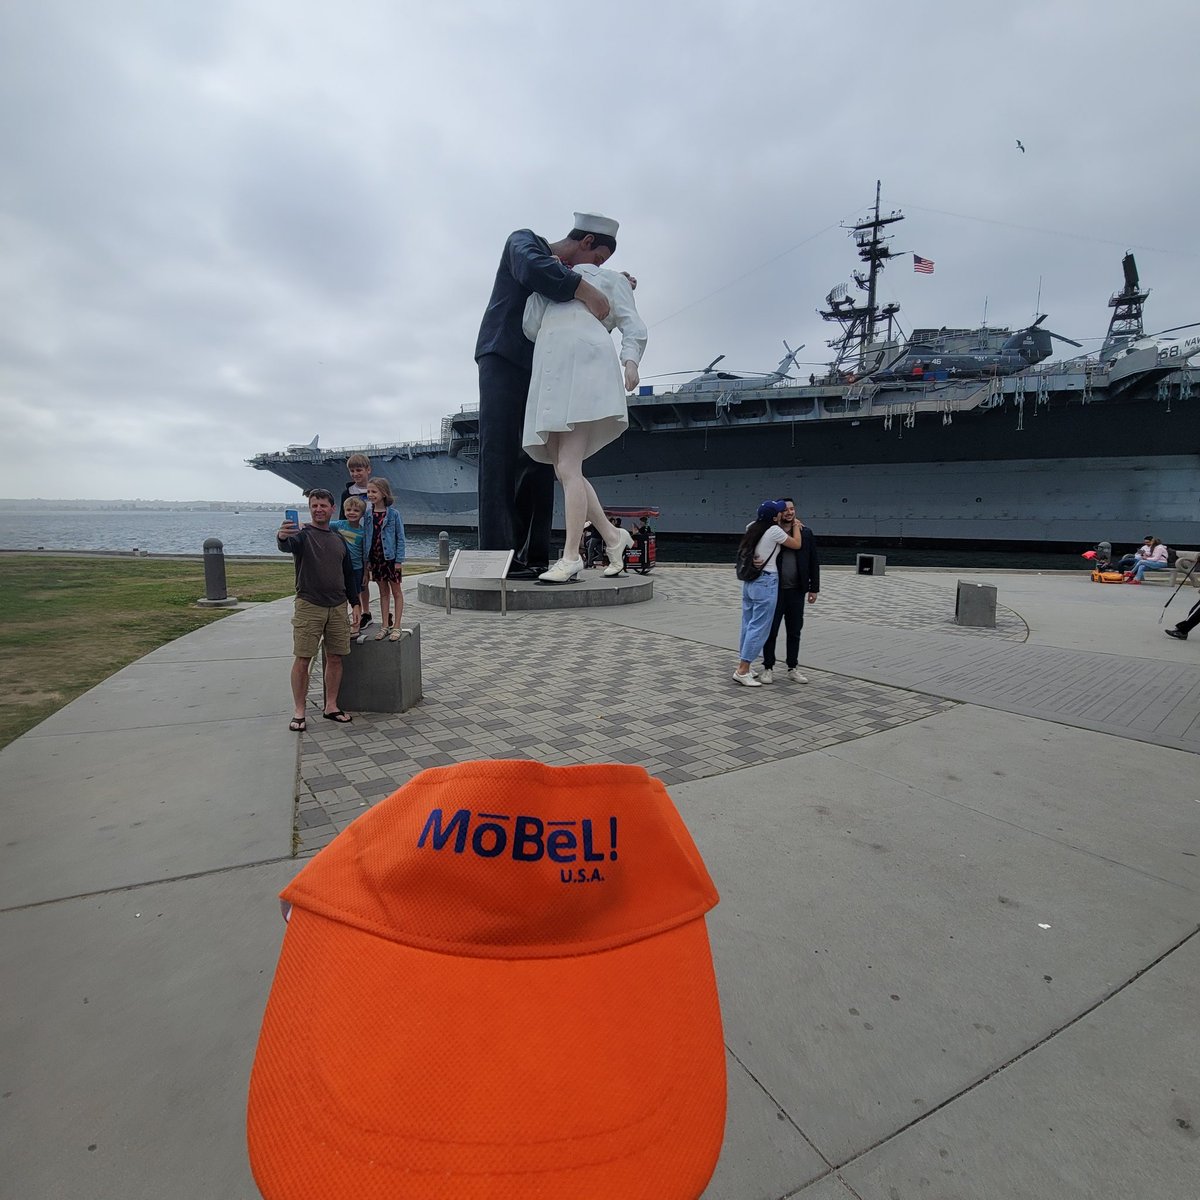 MōBēL! USA SAN DIEGO KISS STATUE VIEW 

#sandiego #ca #california #sailboats #sailor #navy #KISS #STATUE #mobelusa #mobileAlabama